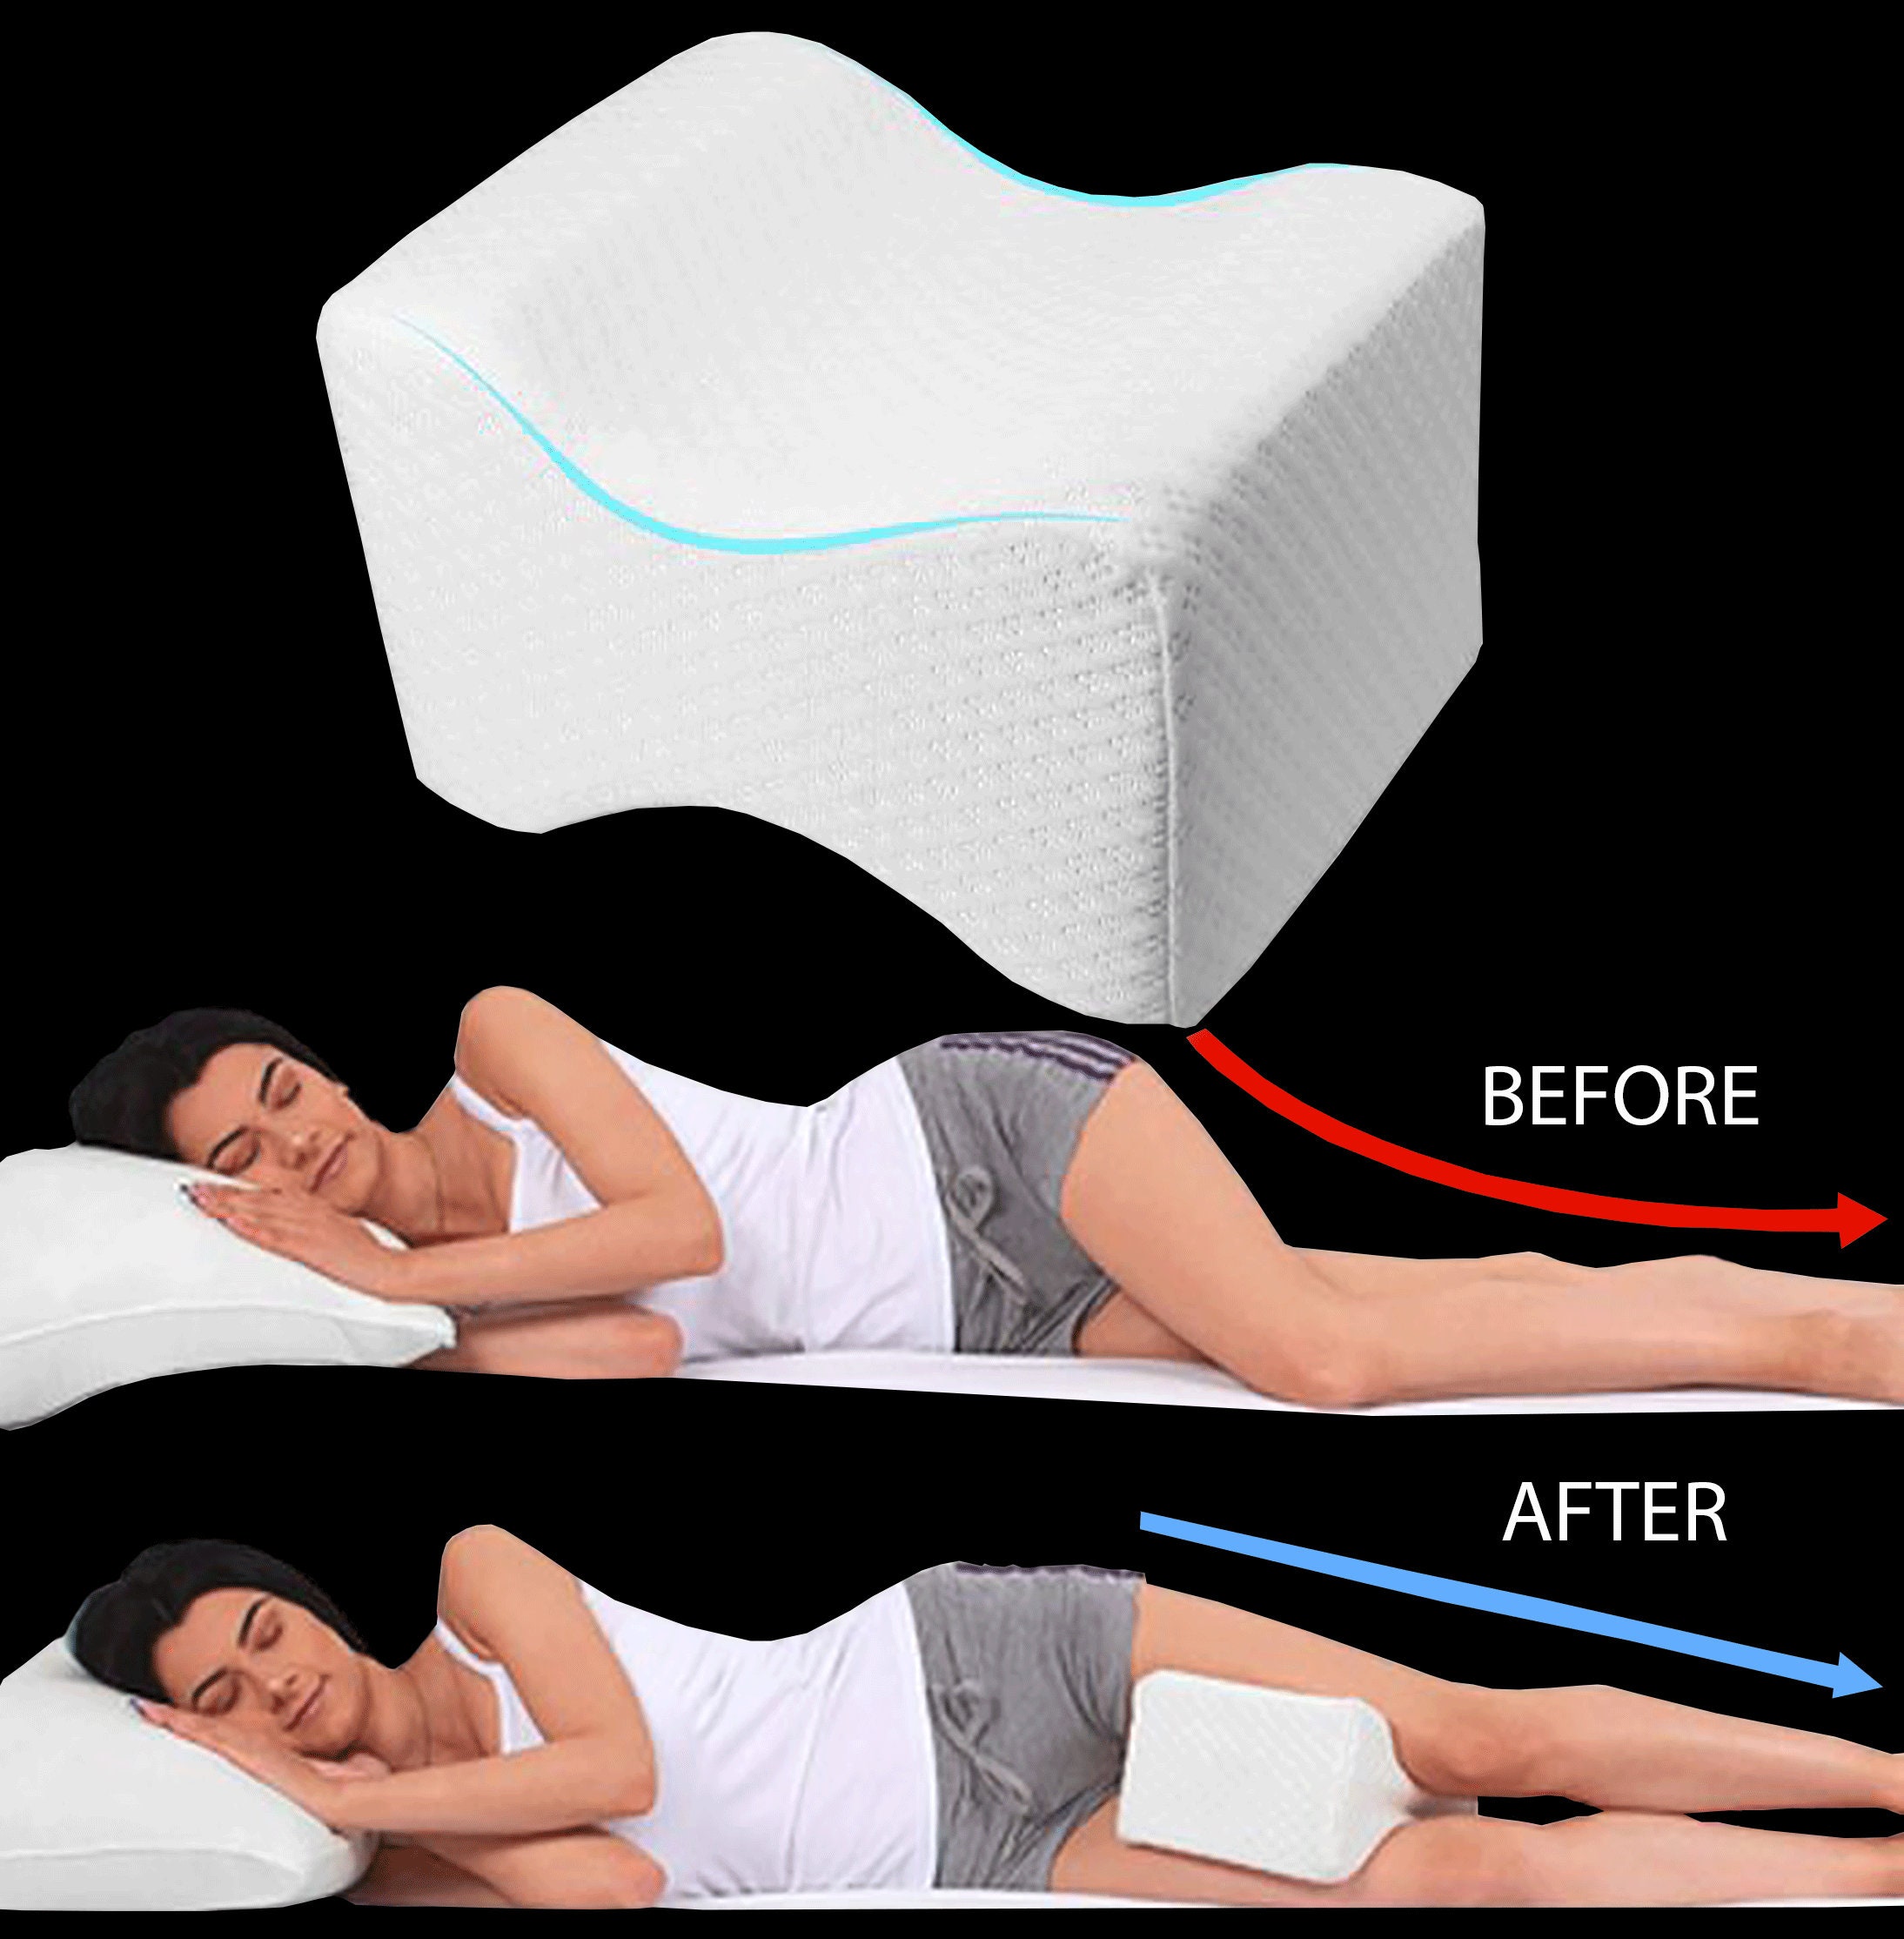 Lumia Wellness Comfort Knee Pillow | Contour Memory Foam Leg Separator for  Side Sleepers